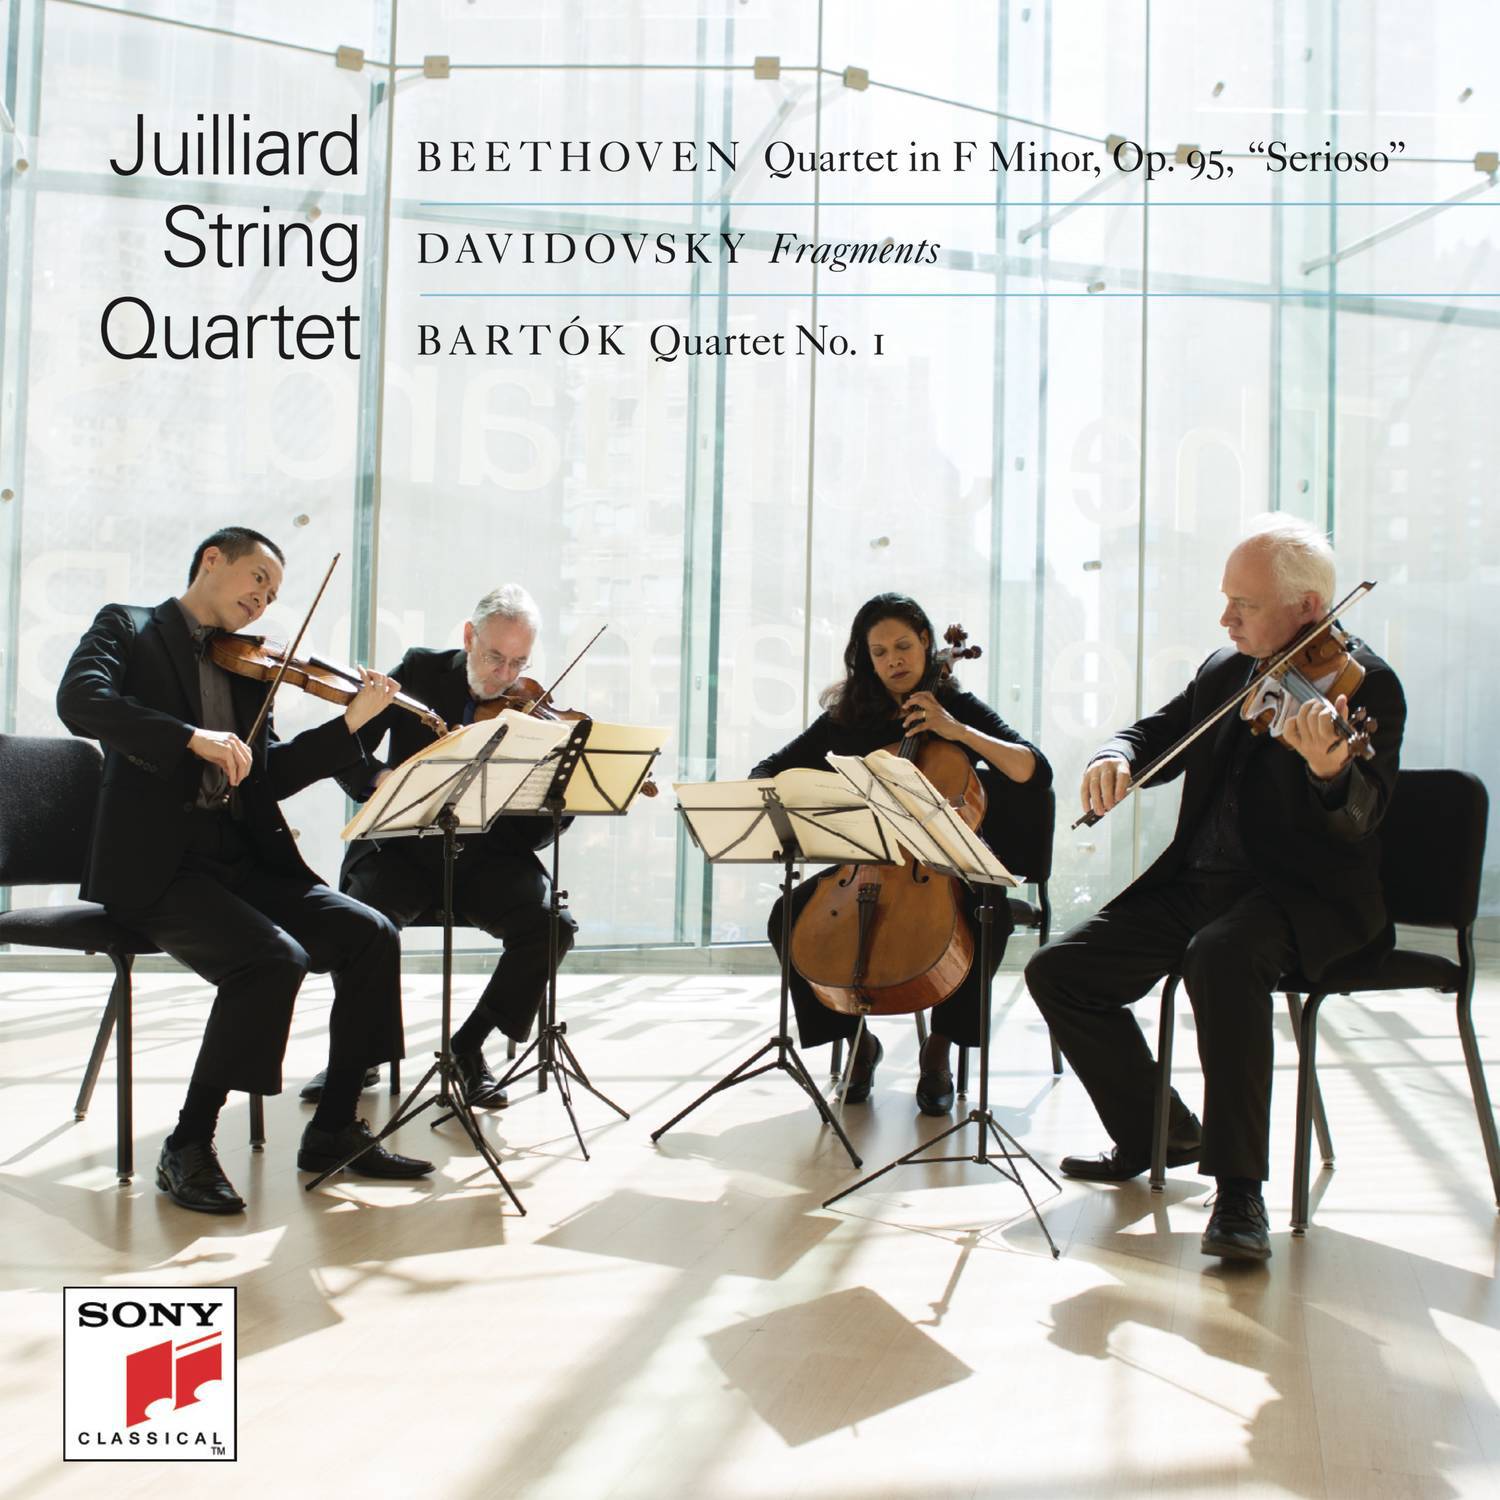 String Quartet in F Minor, Op. 95 " Serioso": III. Allegro assai vivace ma seriosoPiu allegro